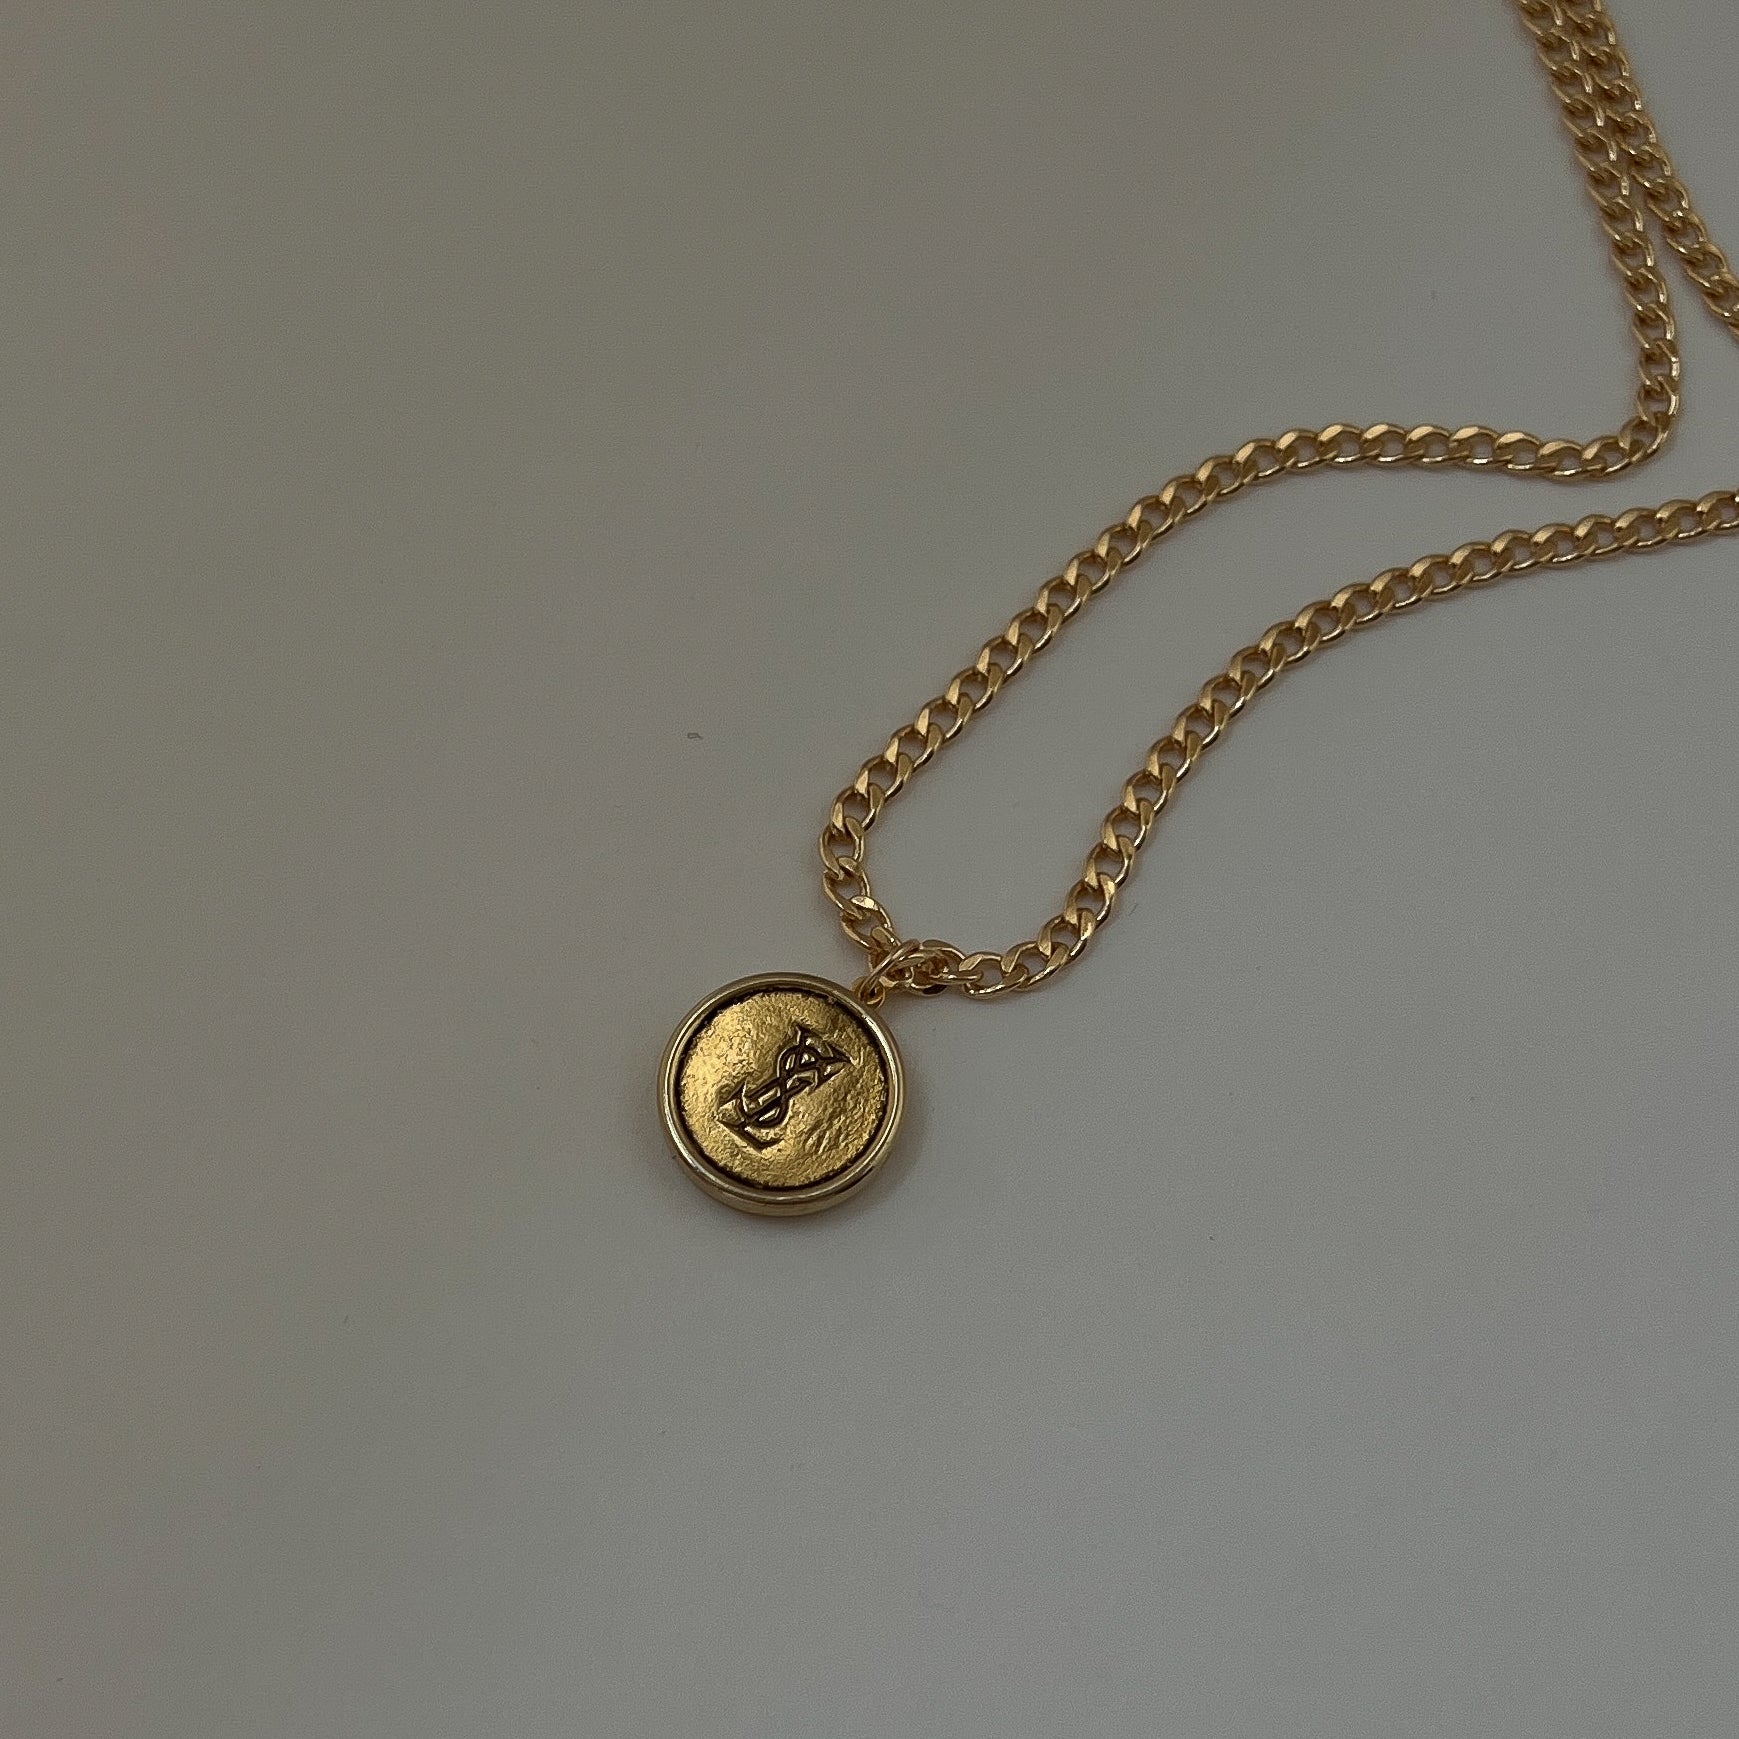 Repurposed Authentic Vintage YSL Gold Pendant Necklace